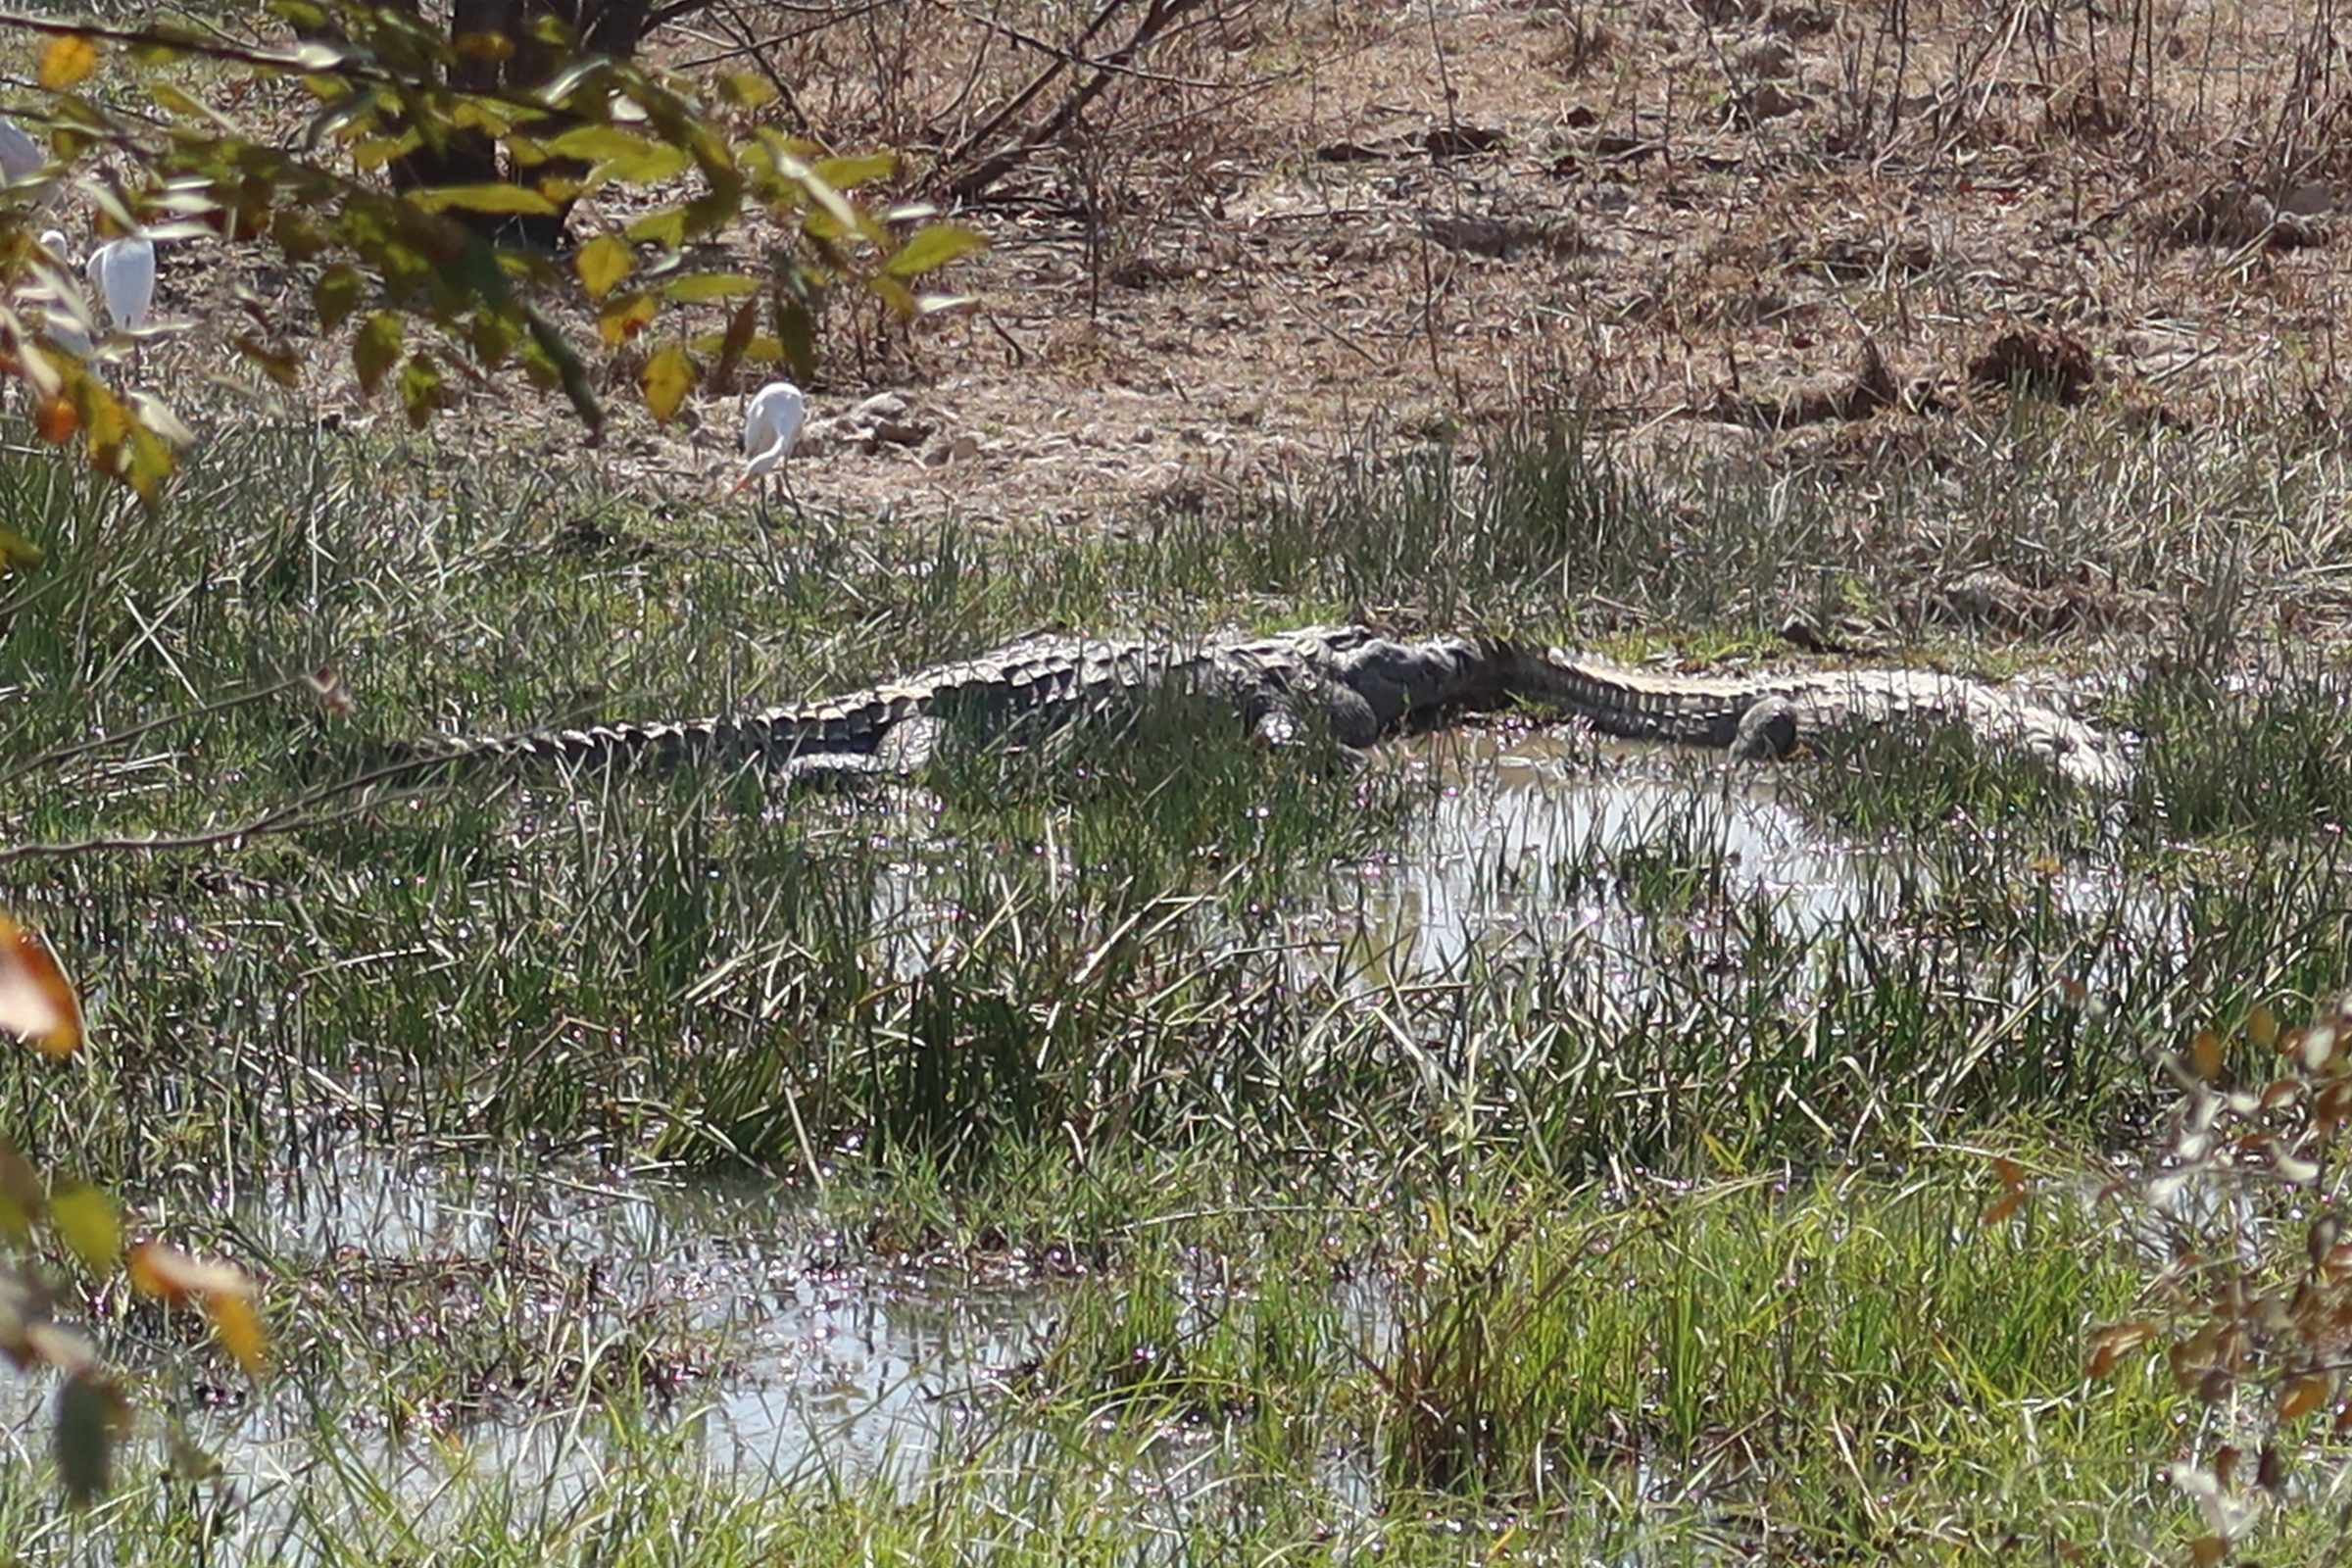 Two crocodiles in Mole National Park, Ghana.